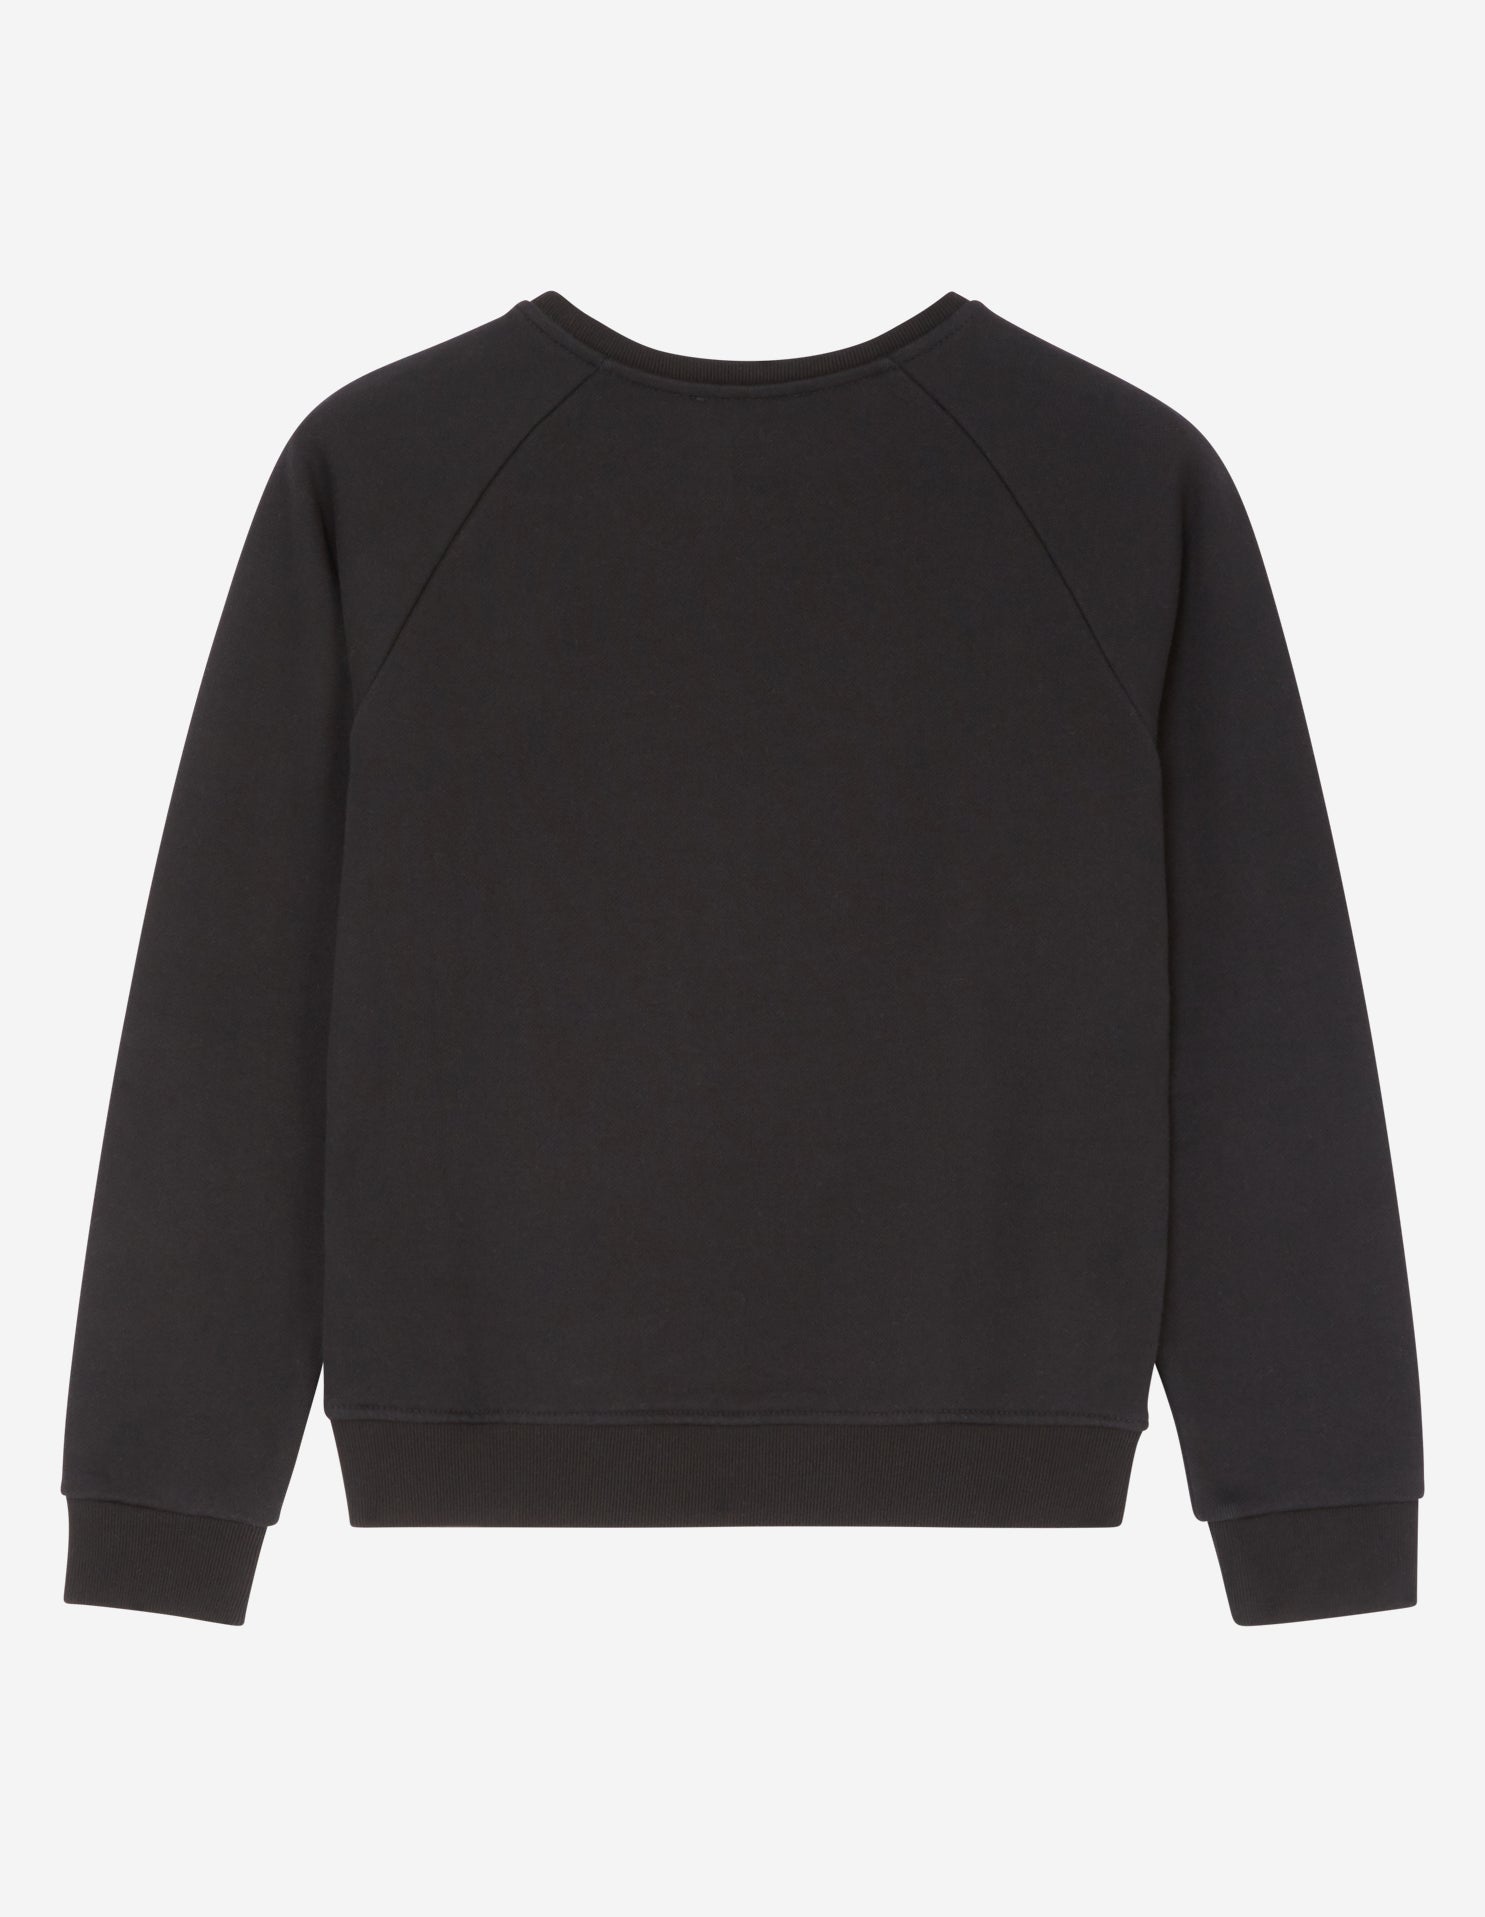 Palais Royale vintage sweatshirt, black